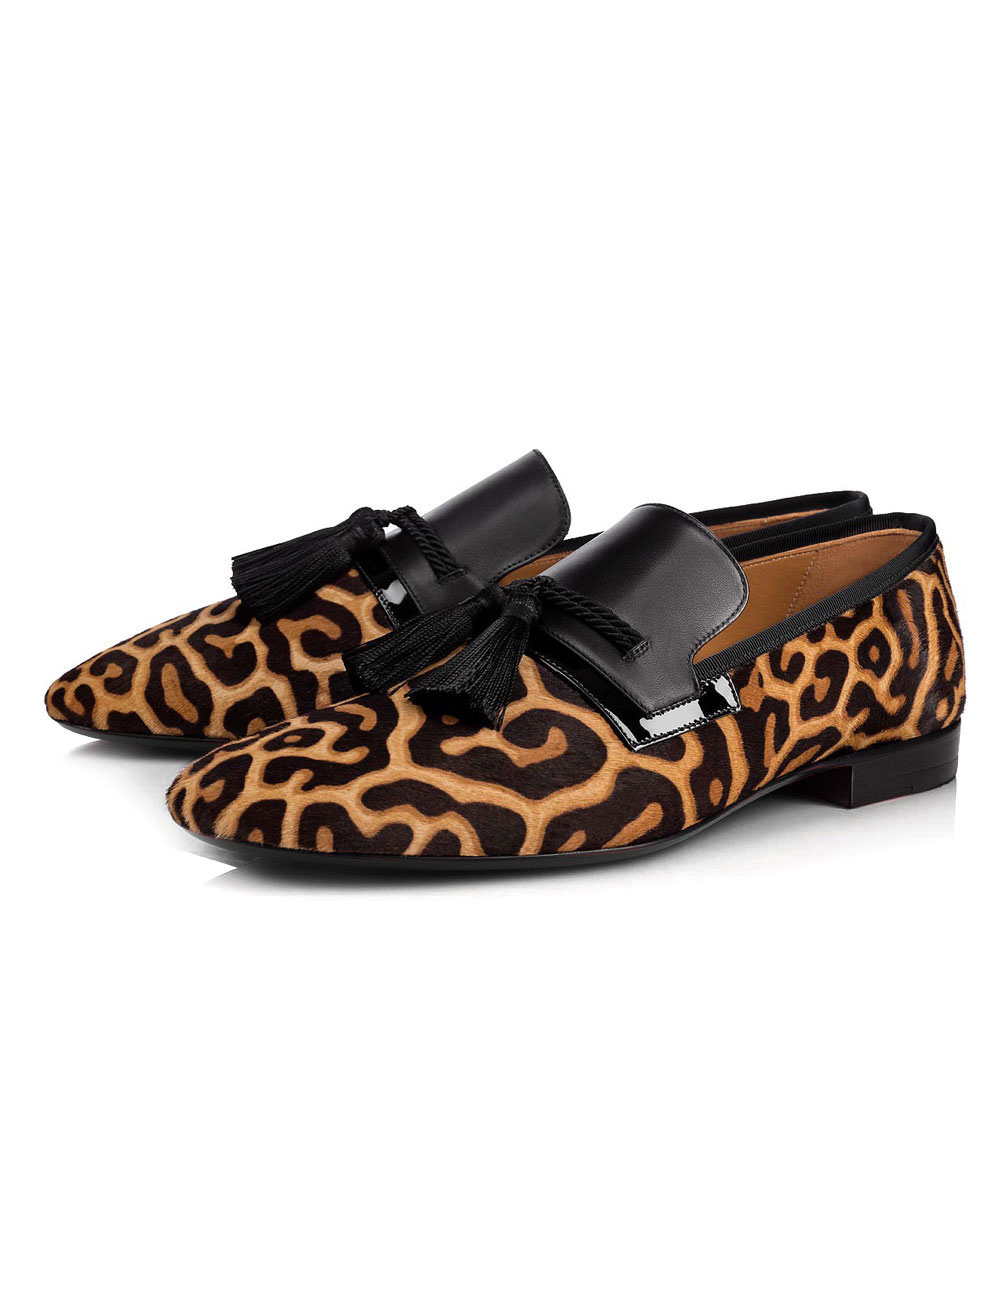 leopard print mens dress shoes